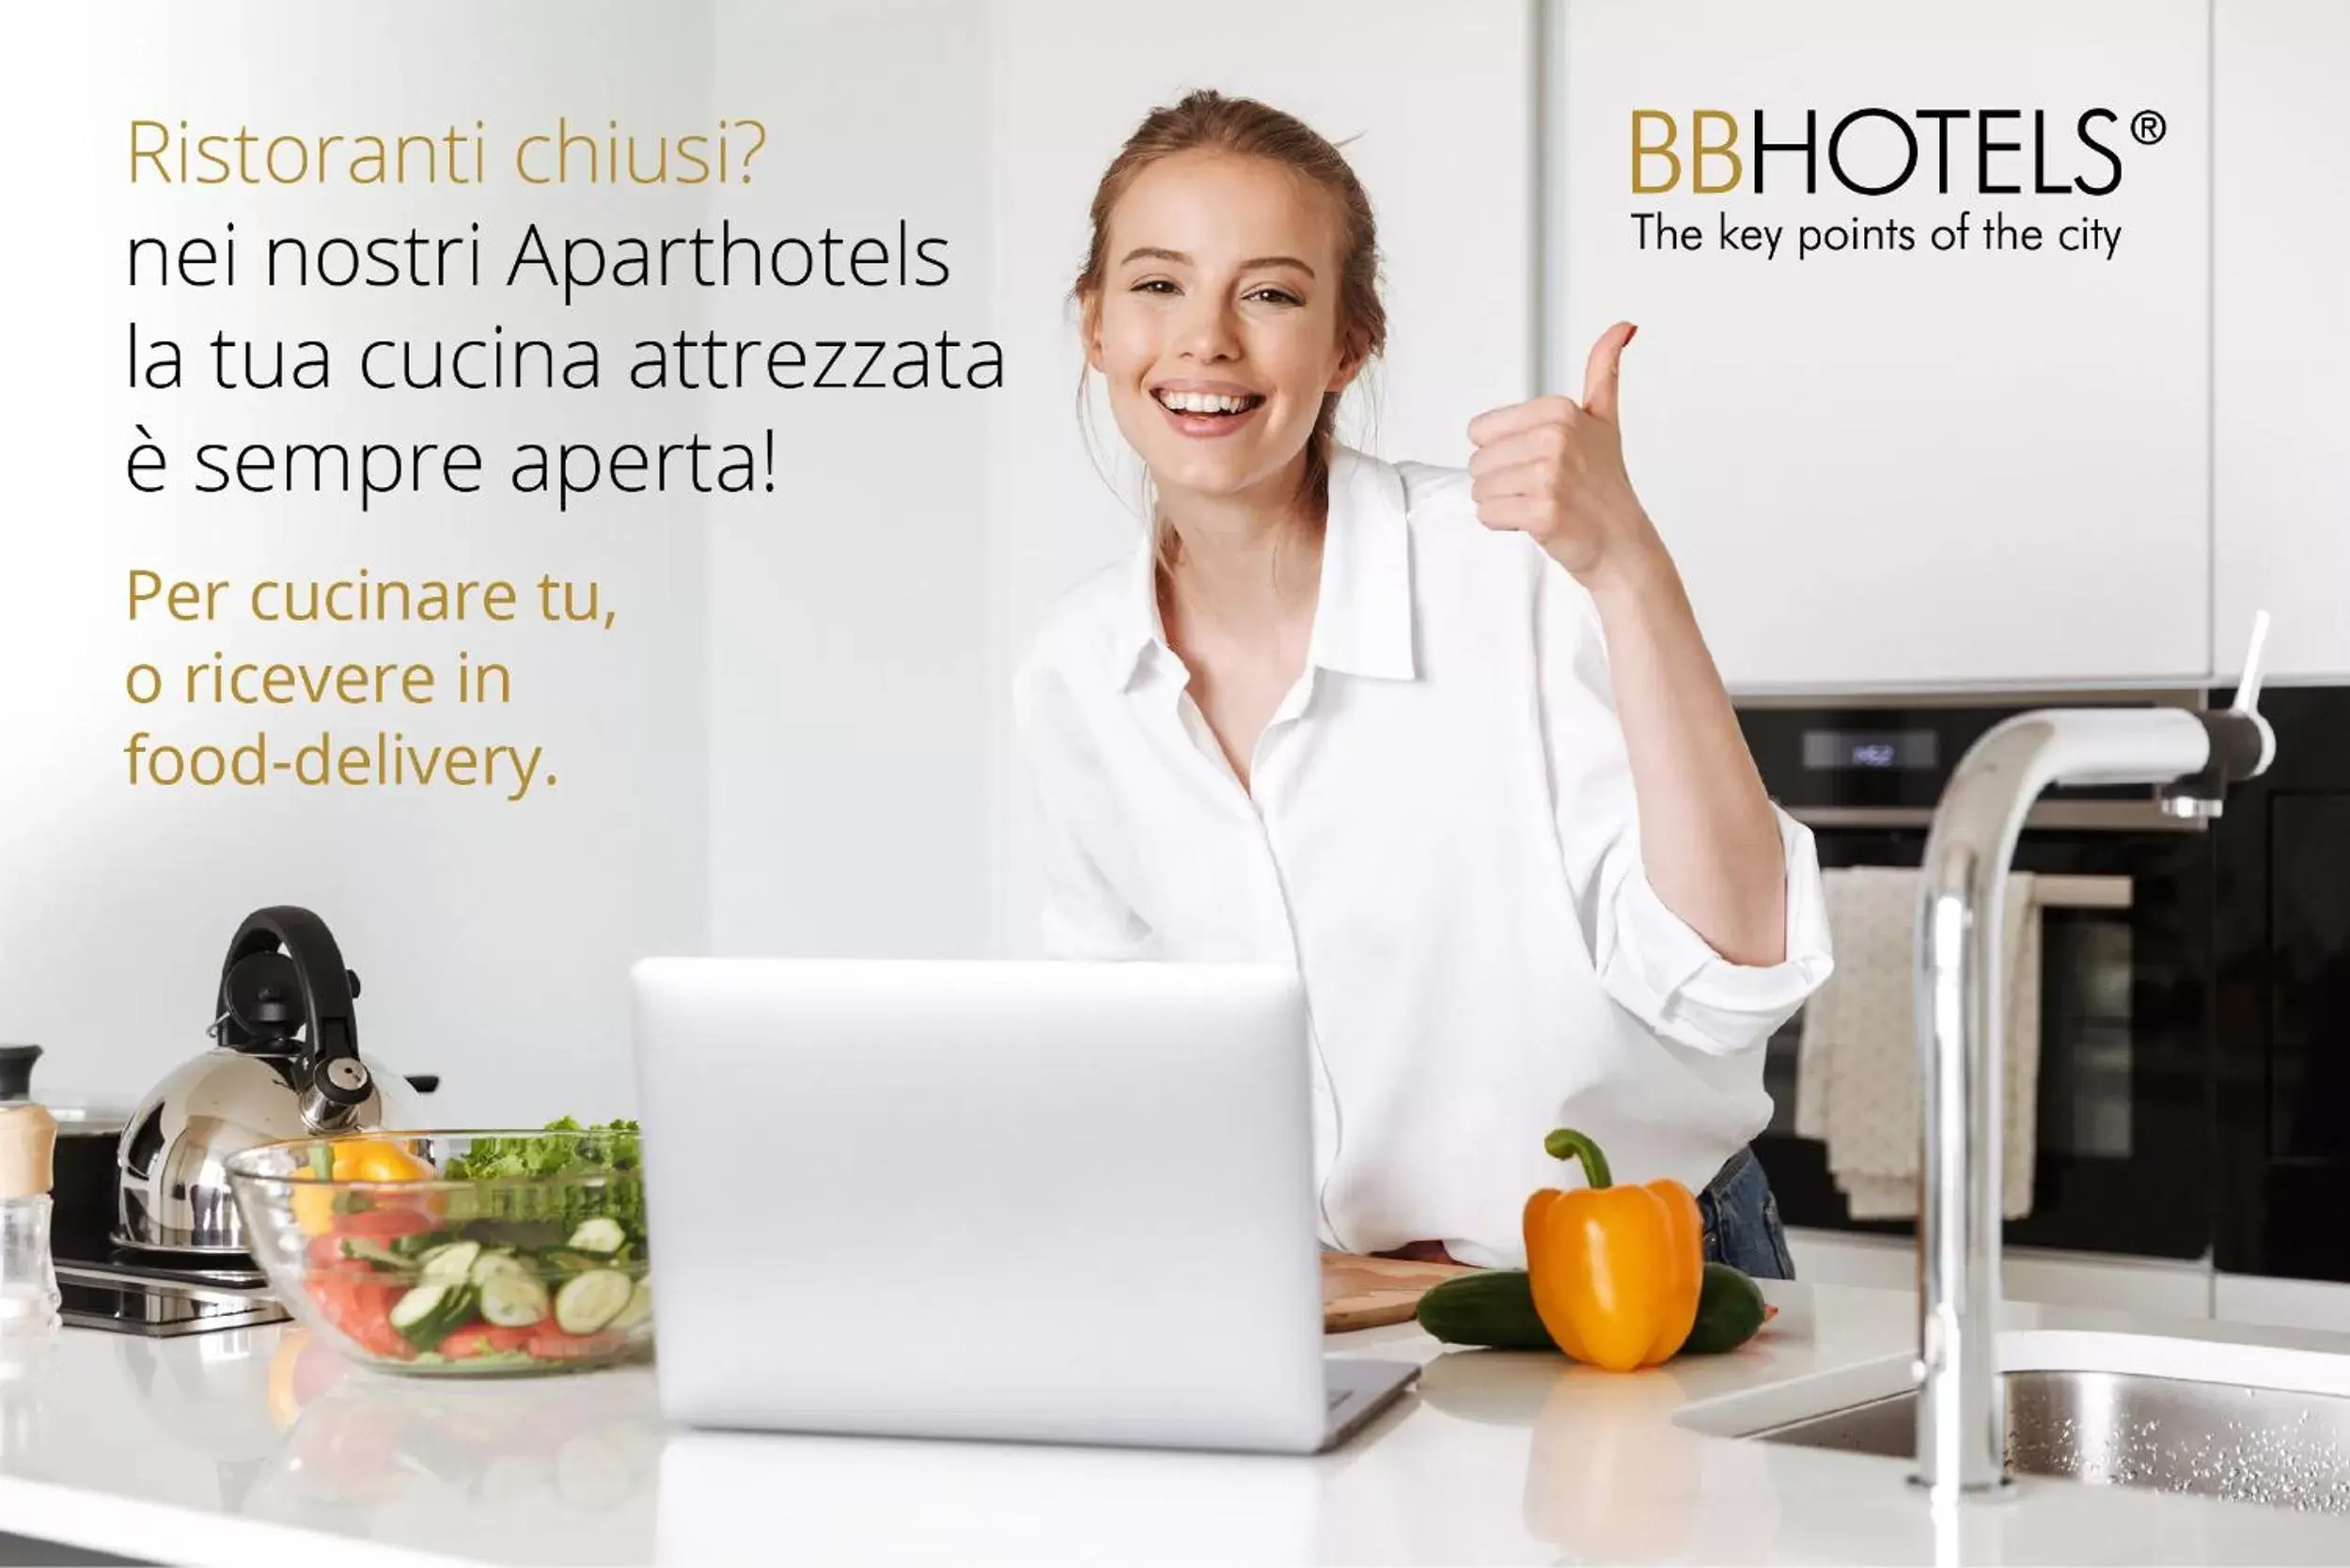 Kitchen or kitchenette in BB Hotels Aparthotel Arcimboldi